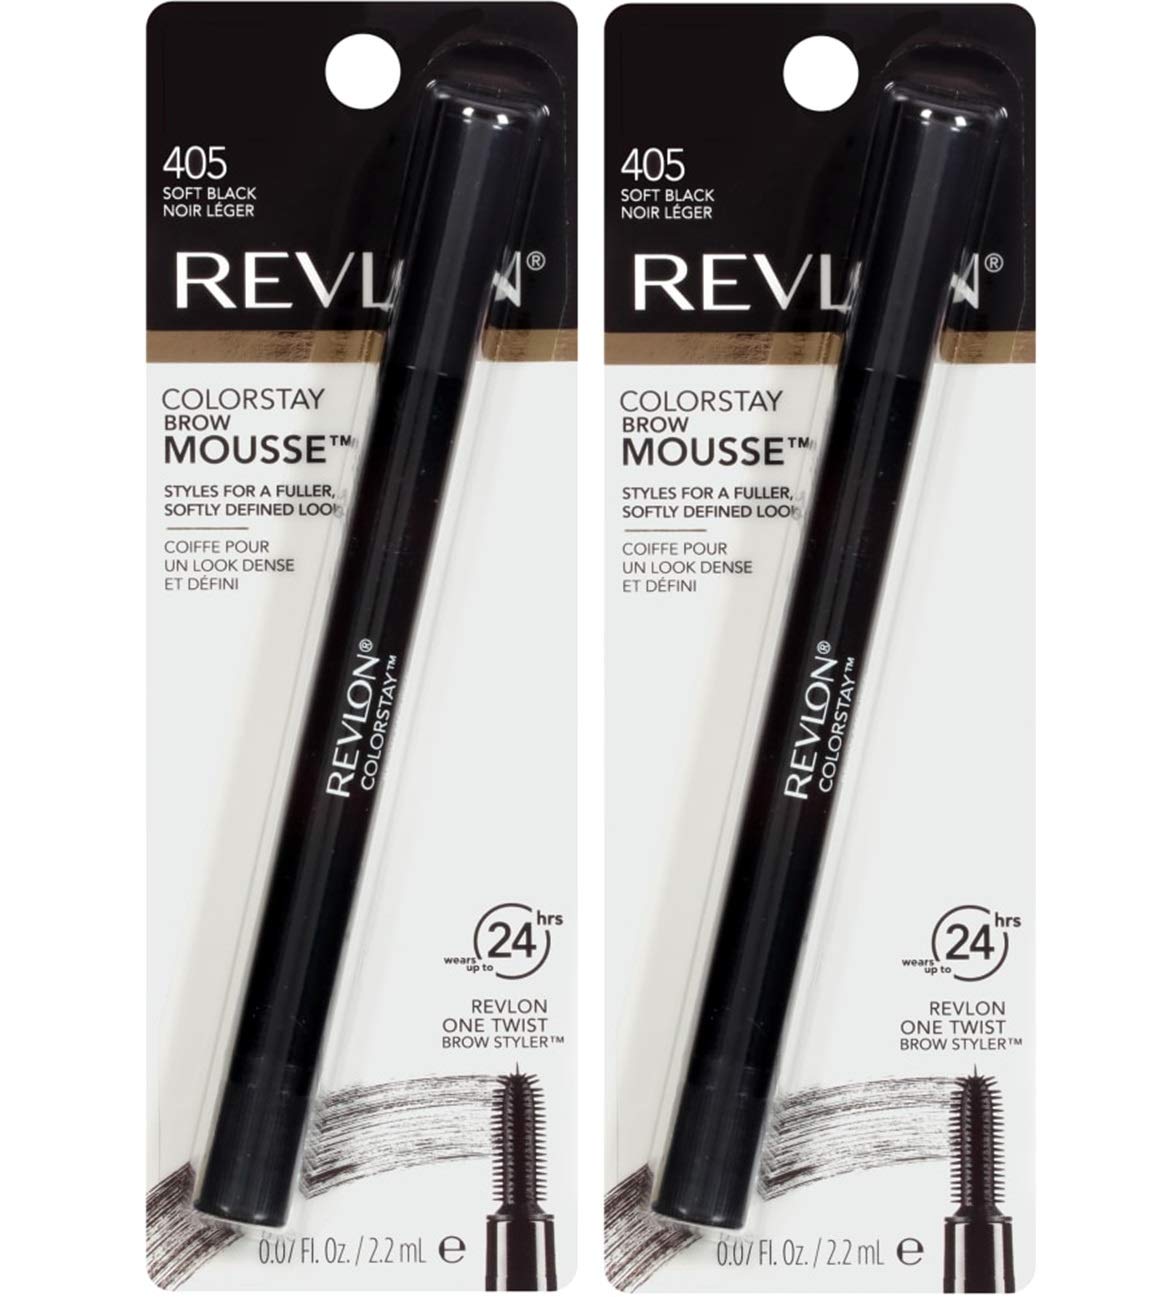 Pack of 2 Revlon Colorstay Brow Mousse, Soft Black (405)